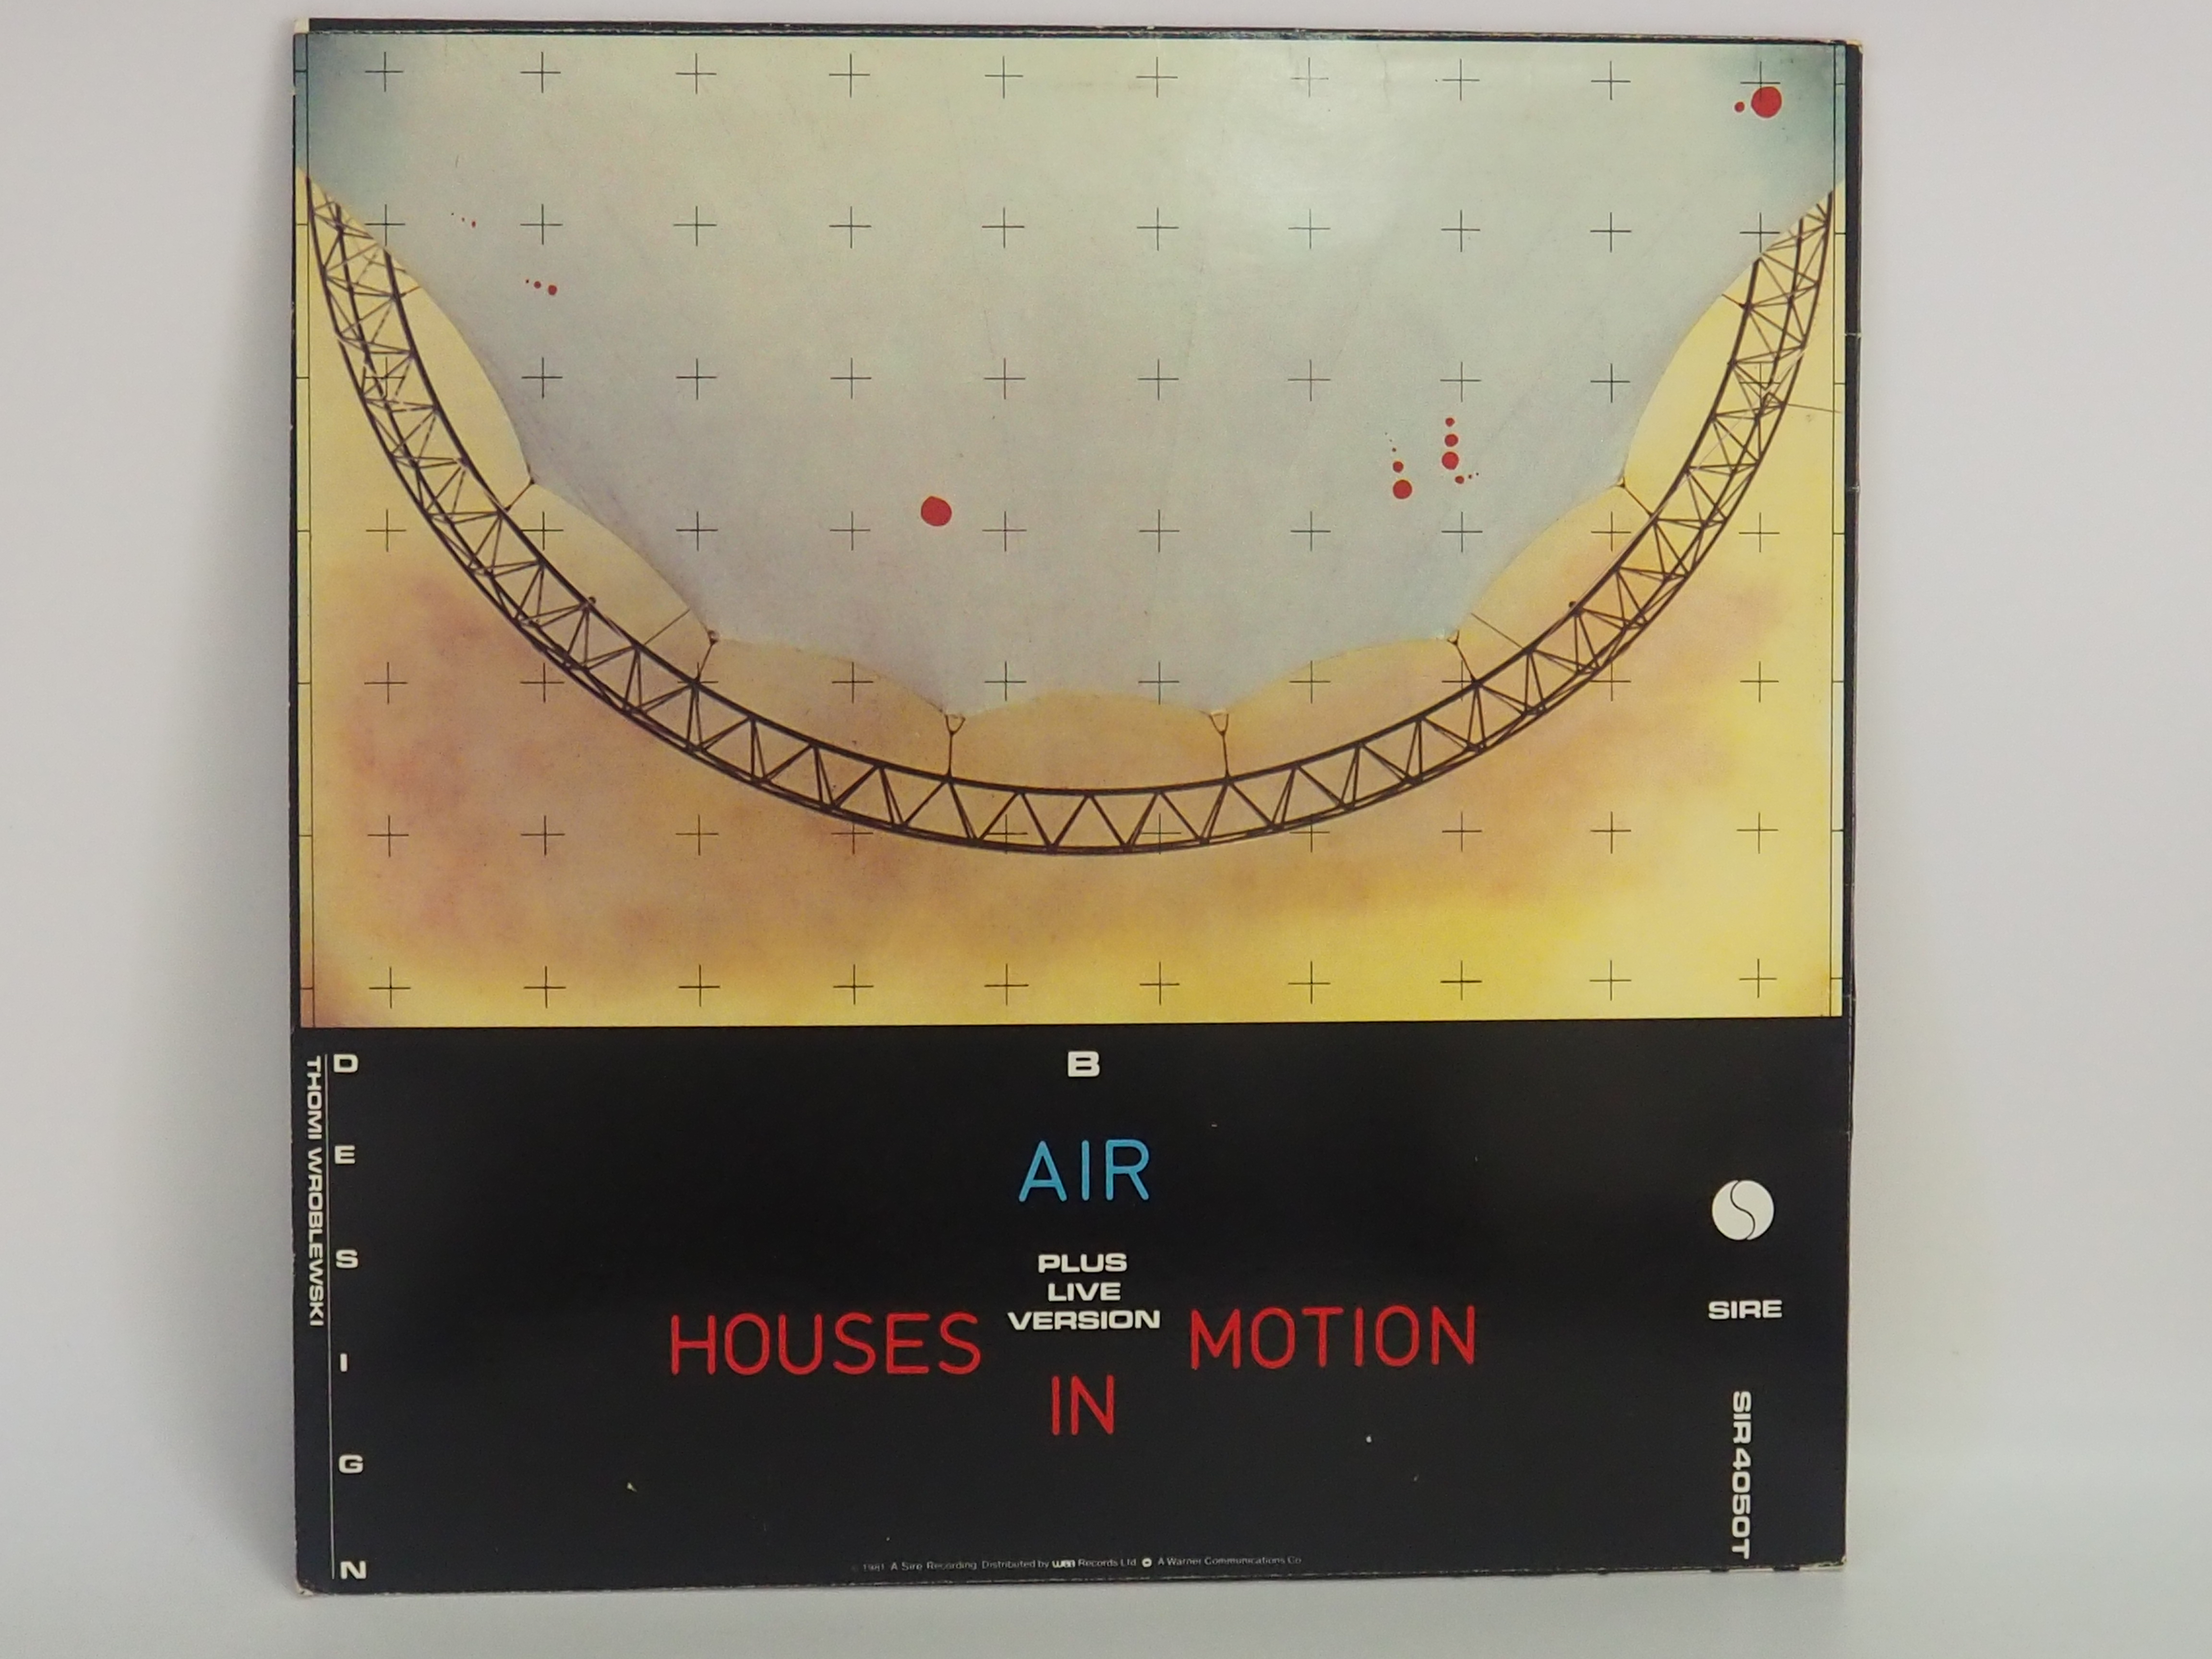 Talking Heads - Houses in motion 12" Single Vinyl. - Image 2 of 2